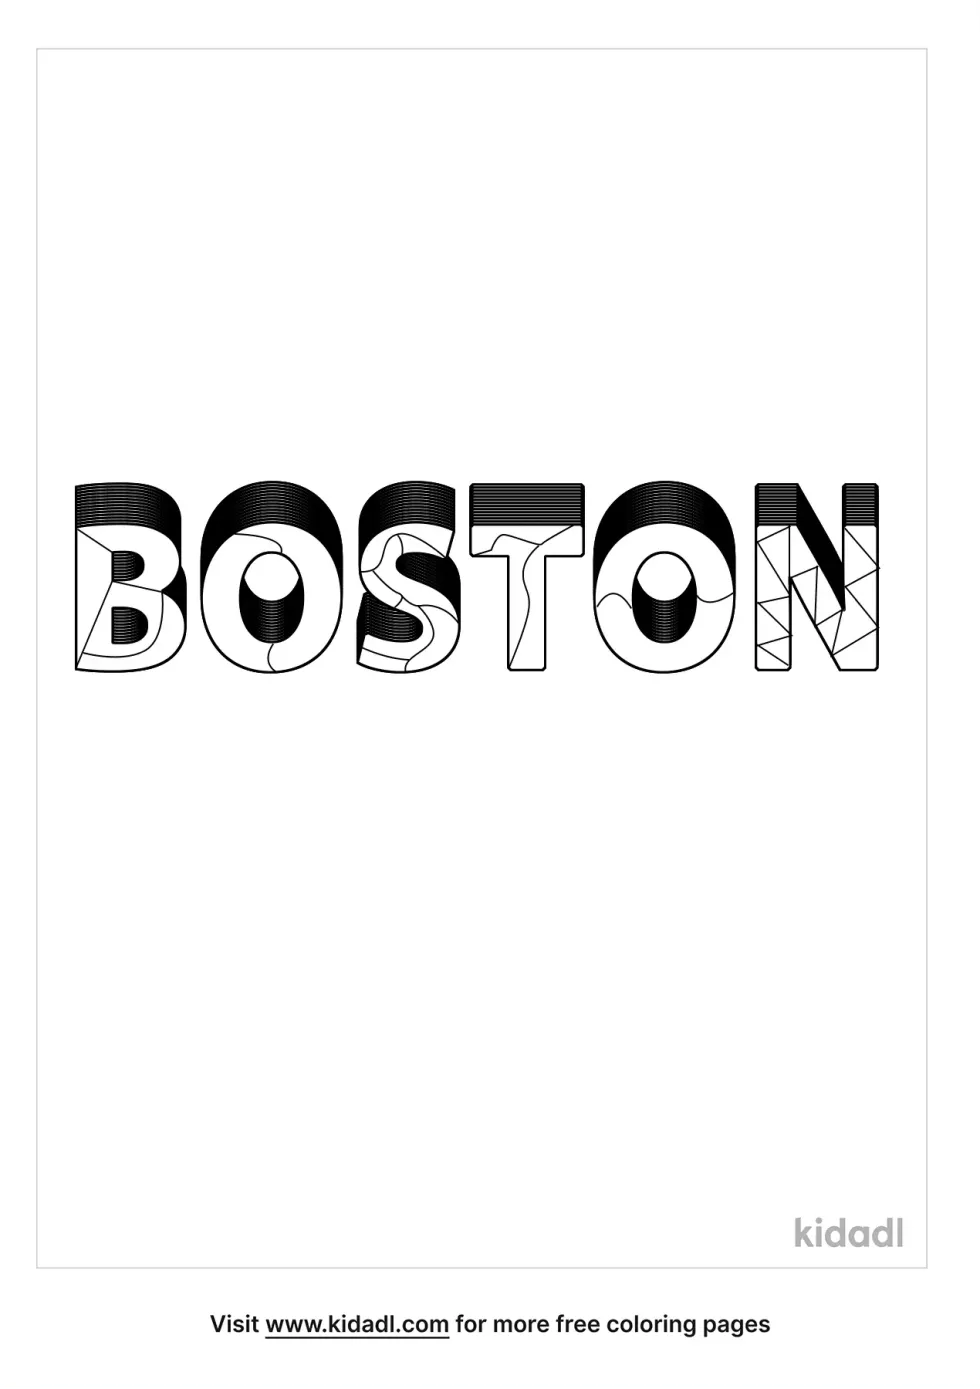 The Word Boston